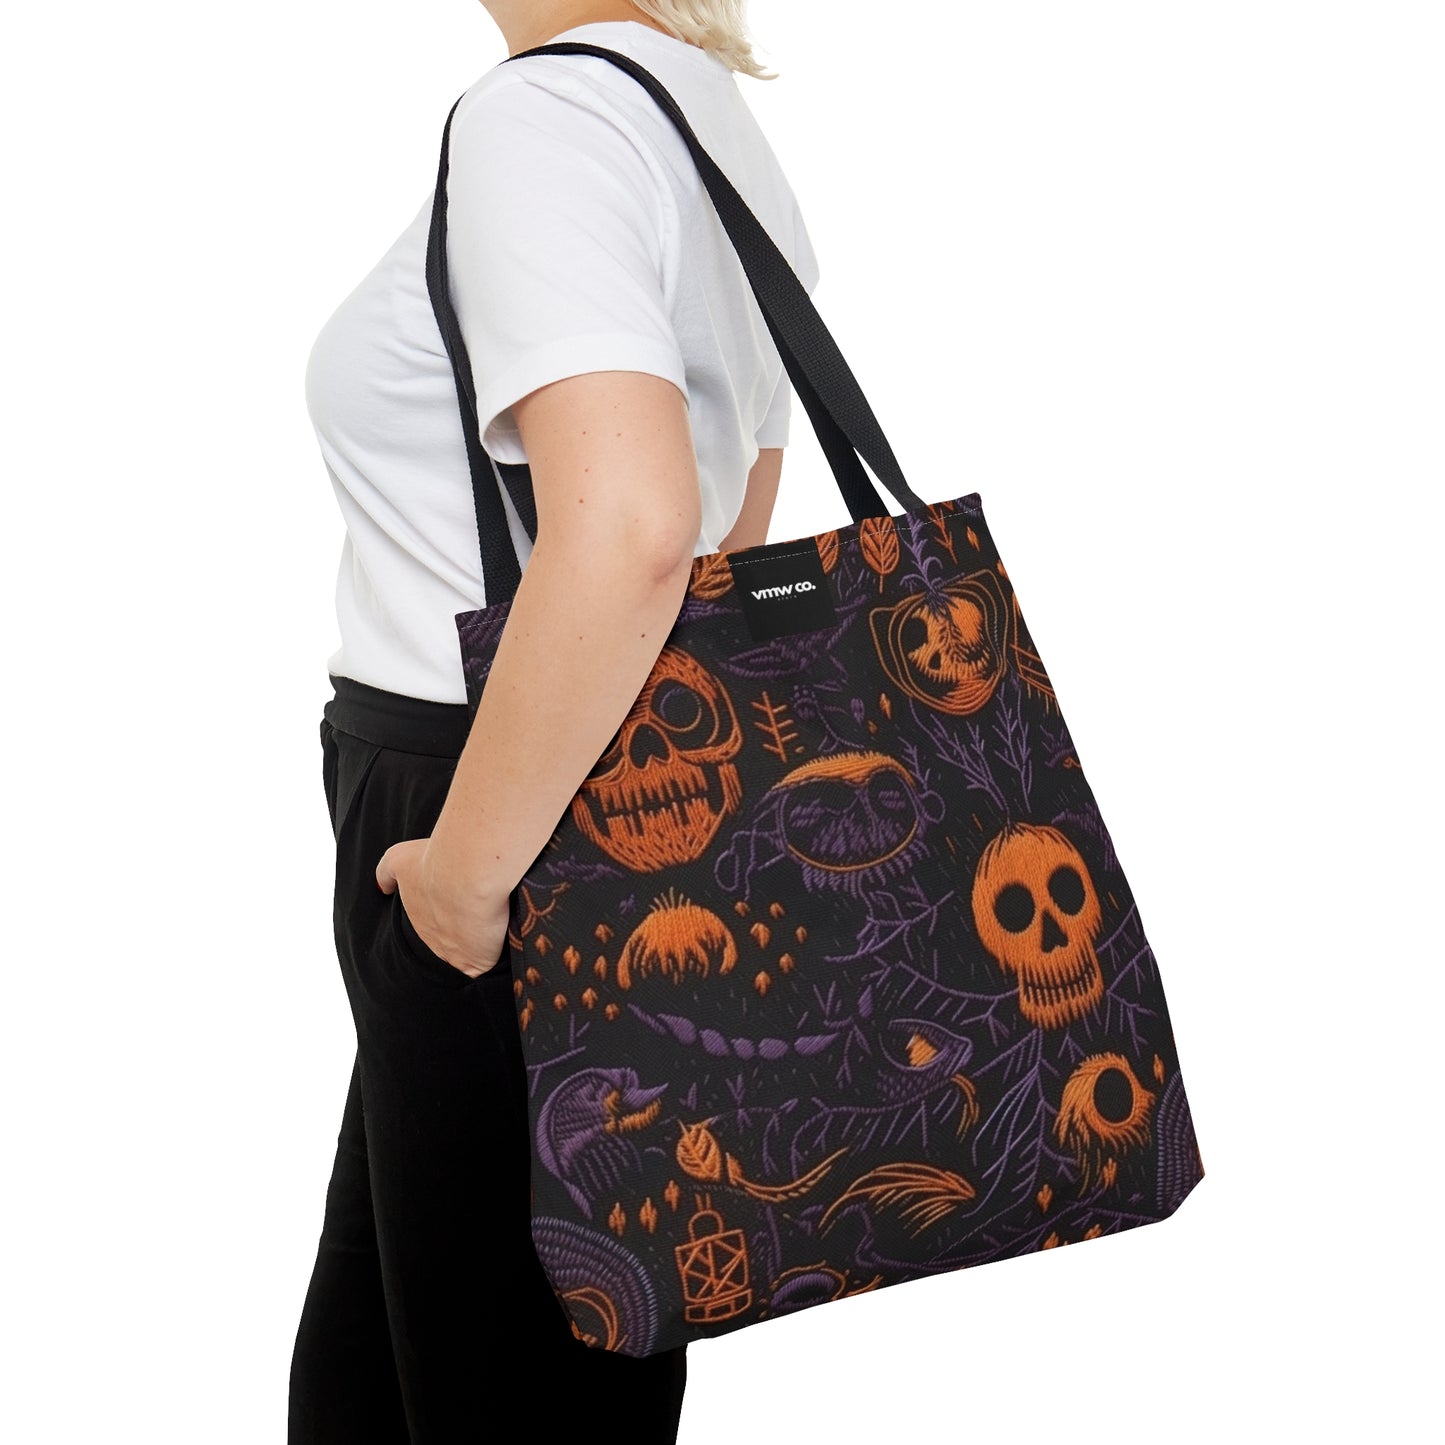 Embroidered Skull Black Purple Tote Bag (AOP)